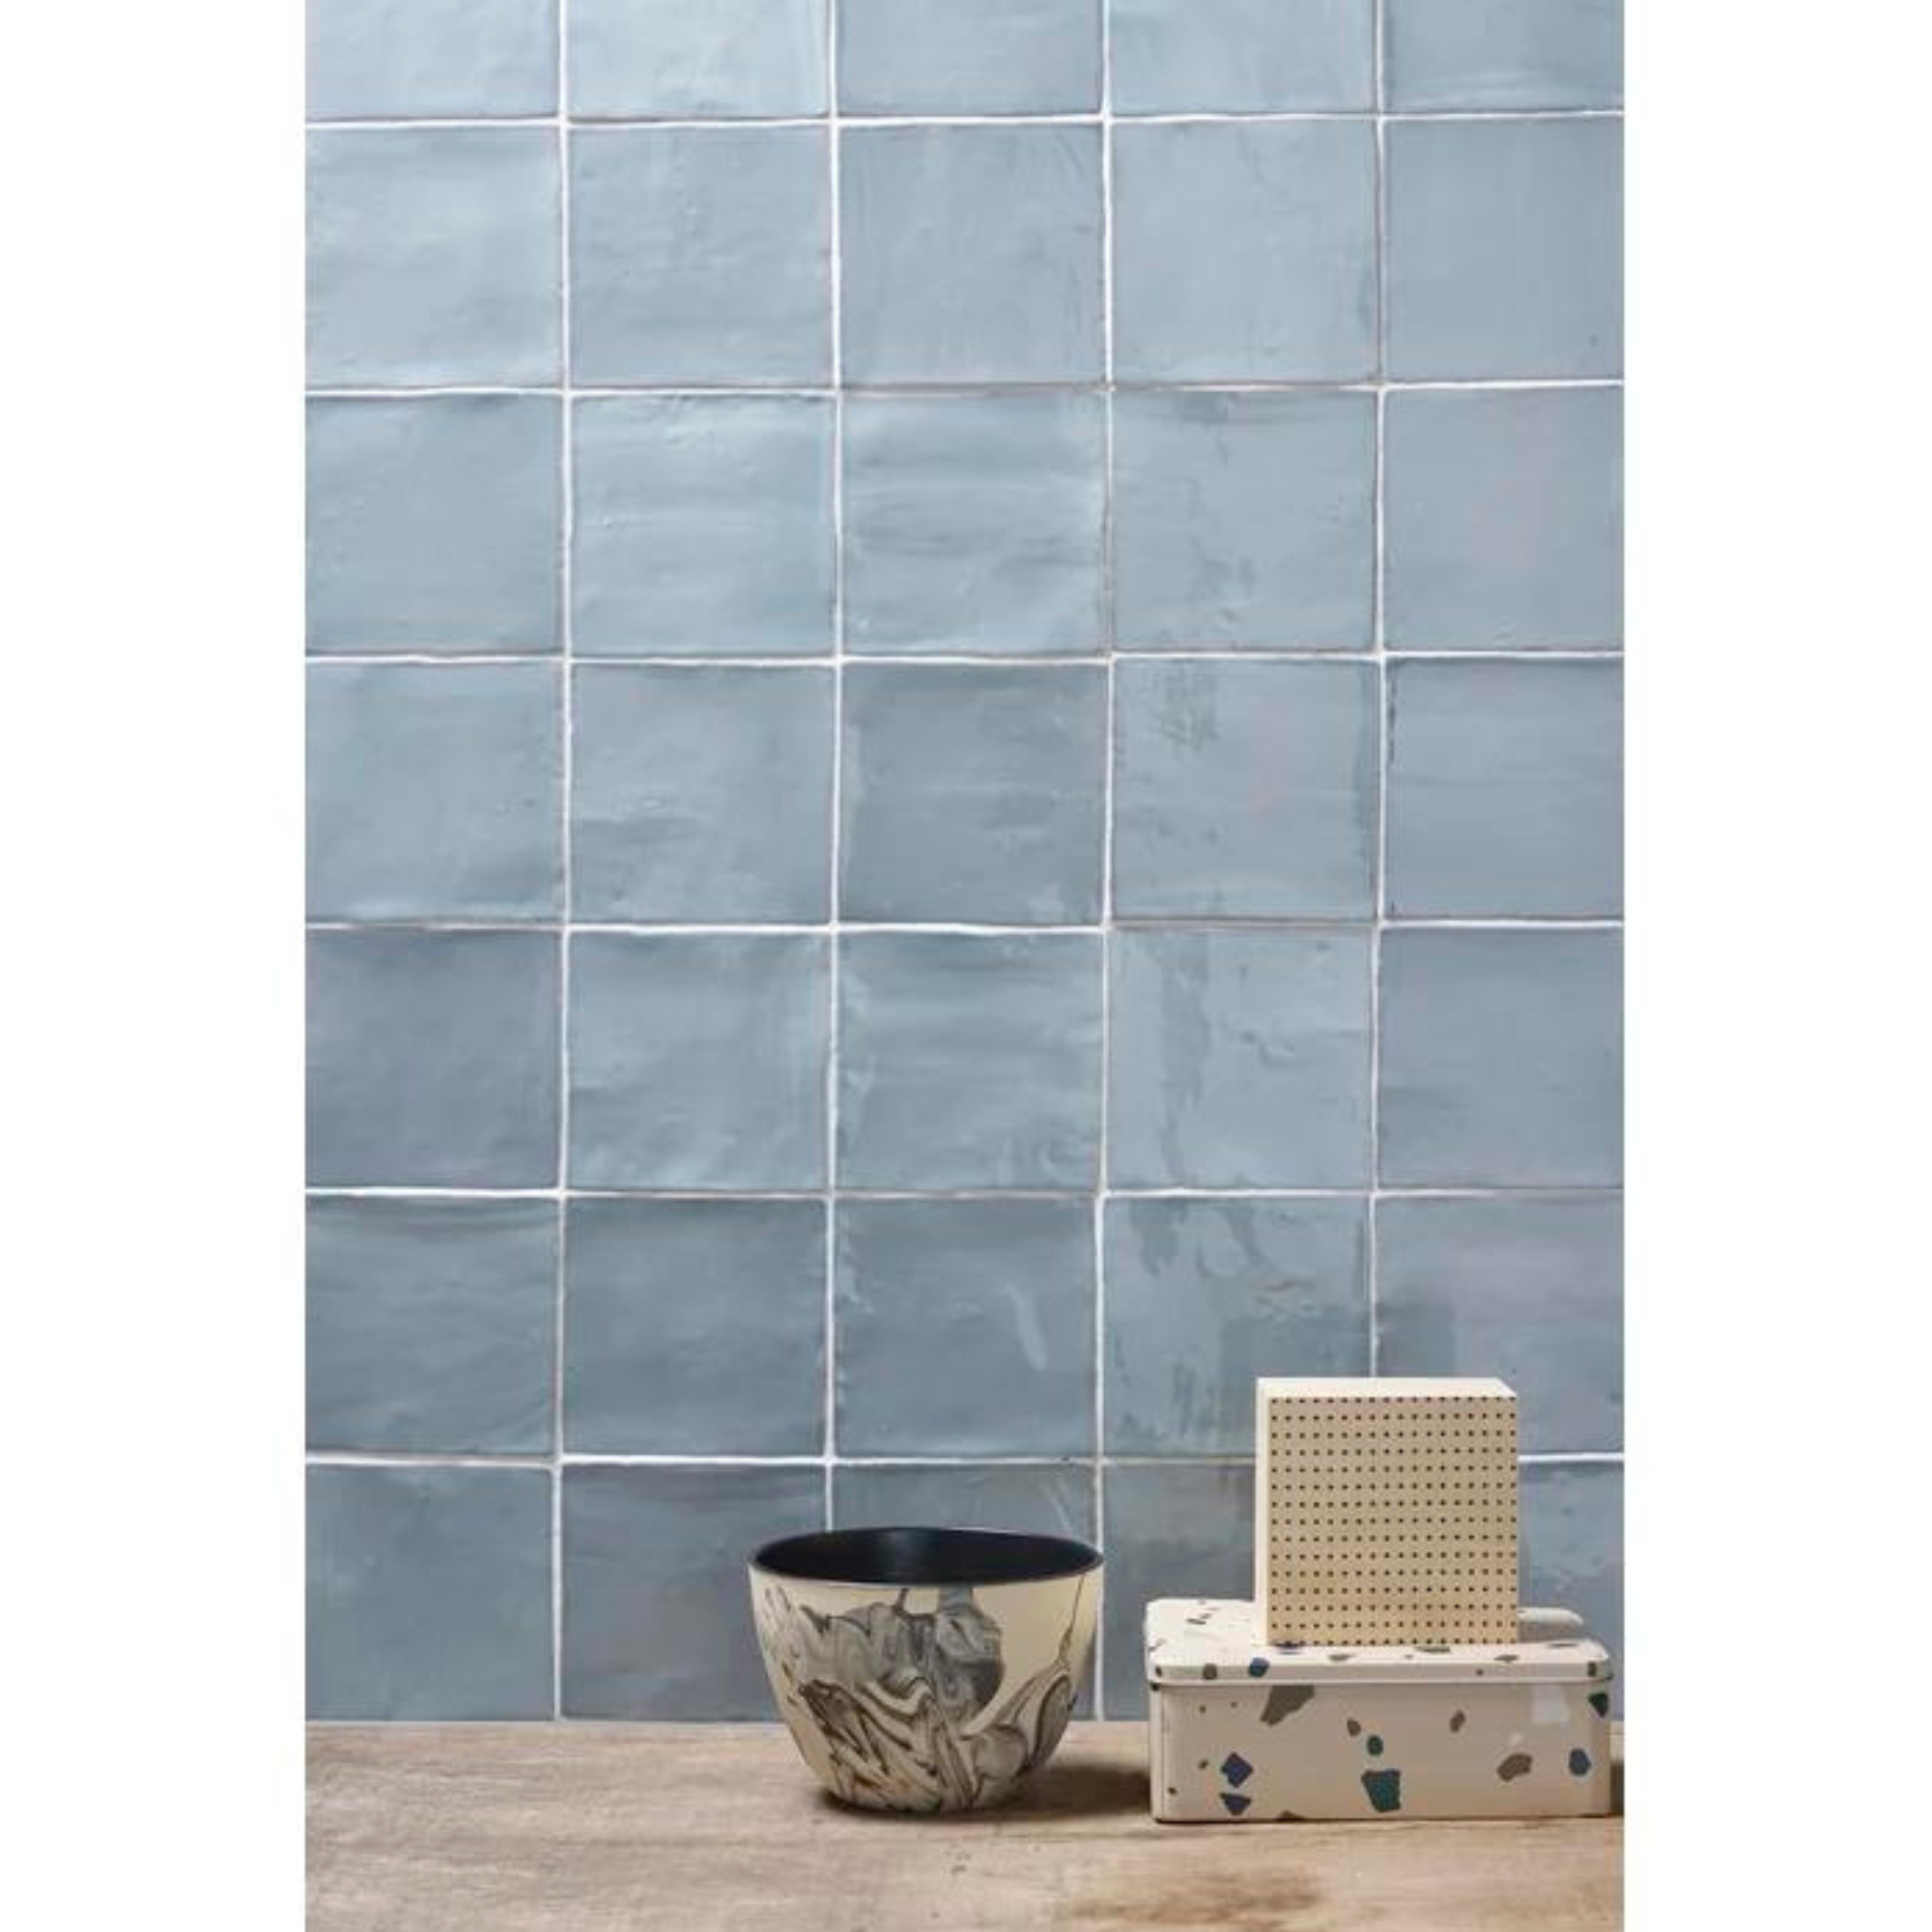 A wall of blue Zellige tile from Wayfair.